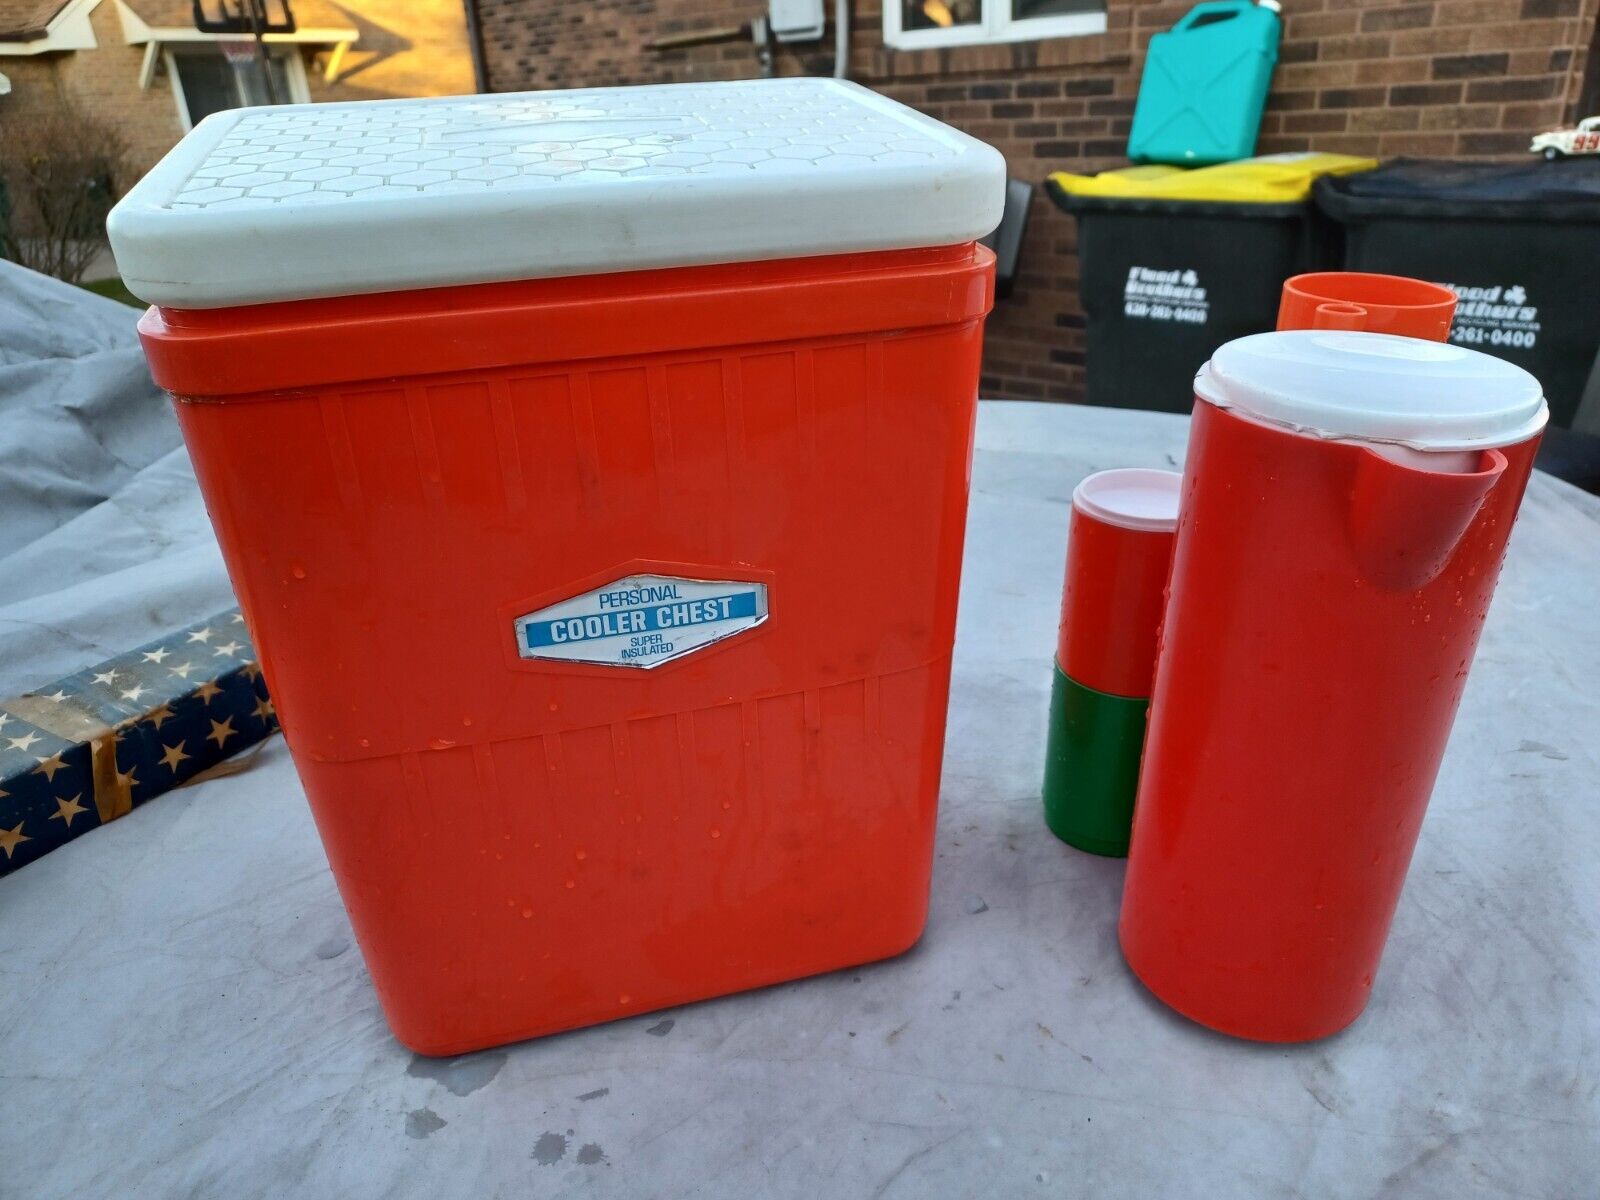 Vintage Amoco Personal Cooler Chest Super Insulated w/ Ingrid Dispenser Set -Red